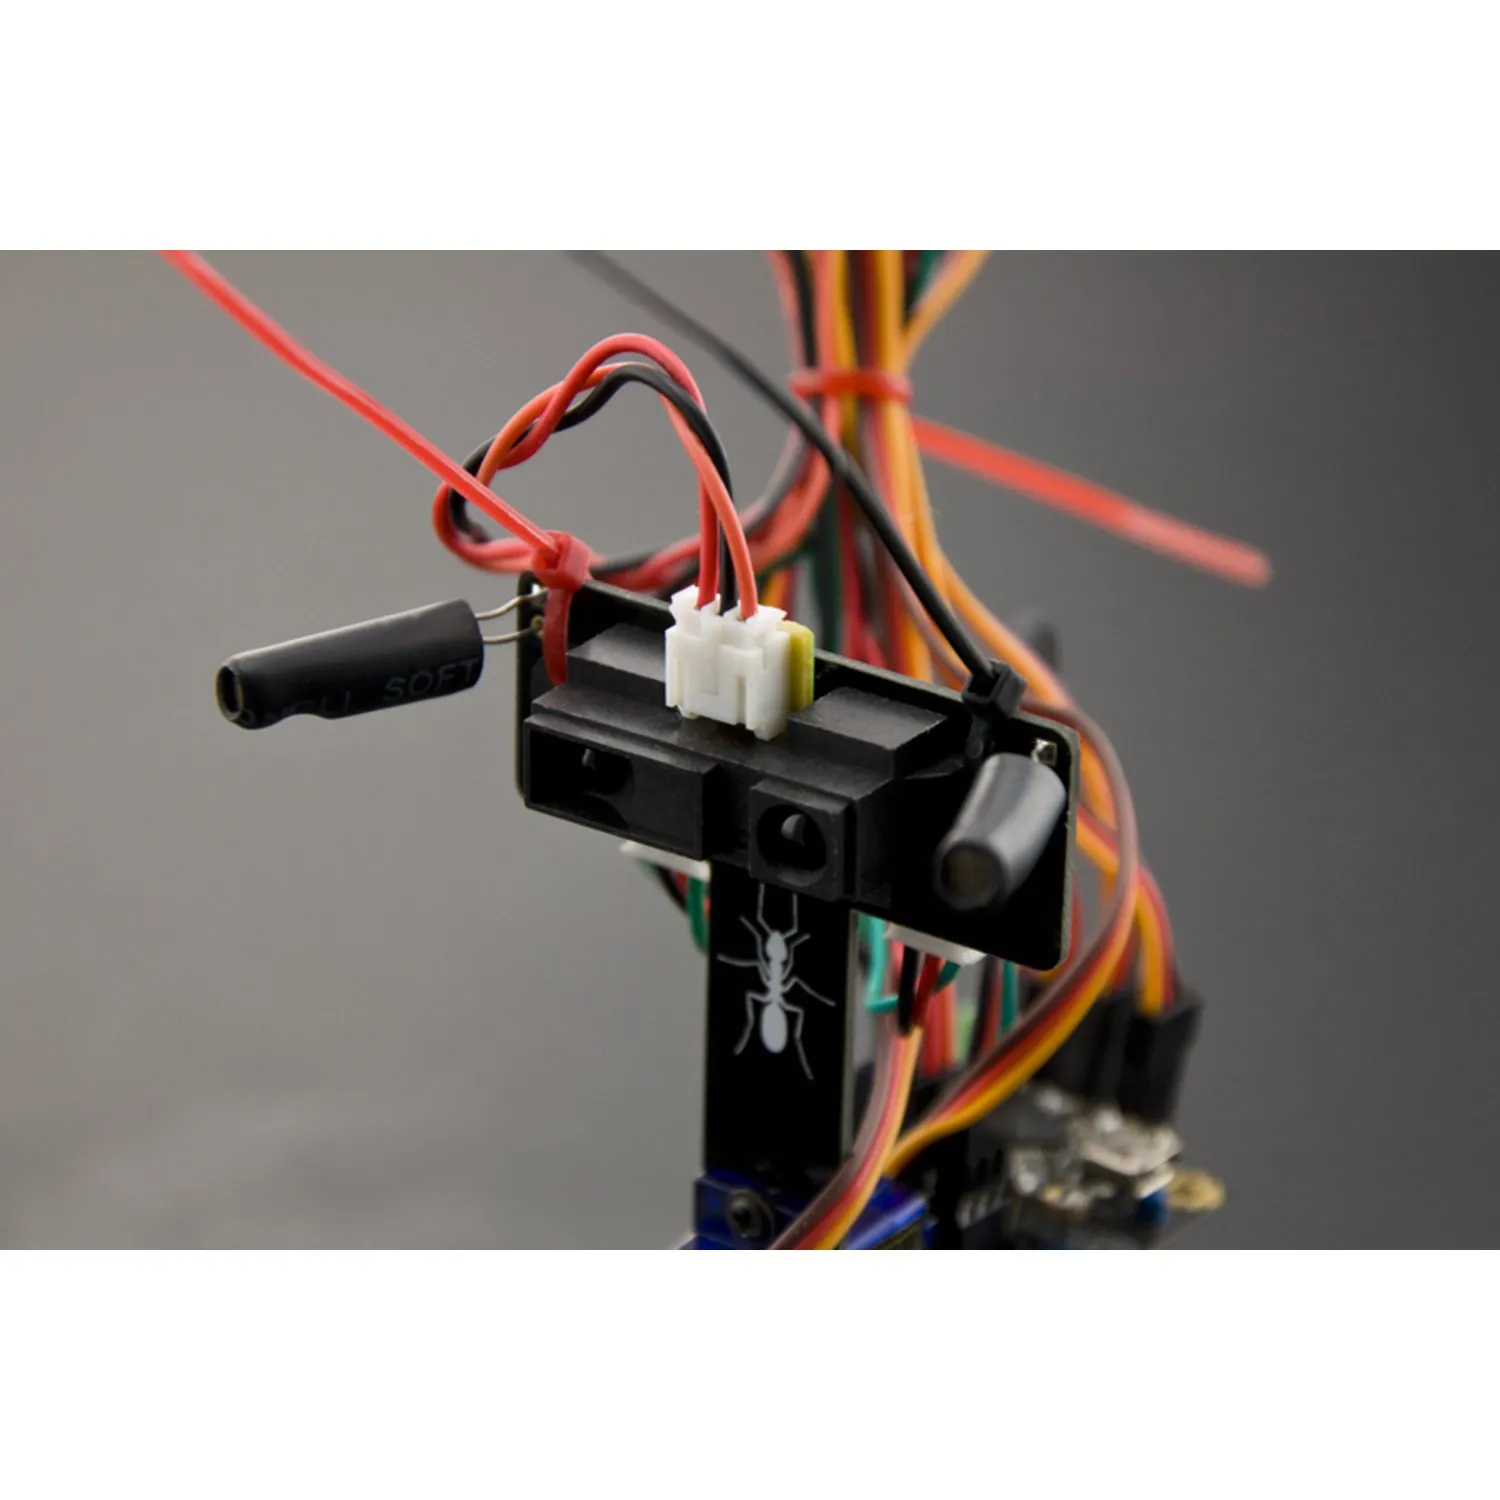 Photo of Insectbot Hexa -An Arduino Based Walking Robot Kit For Kids